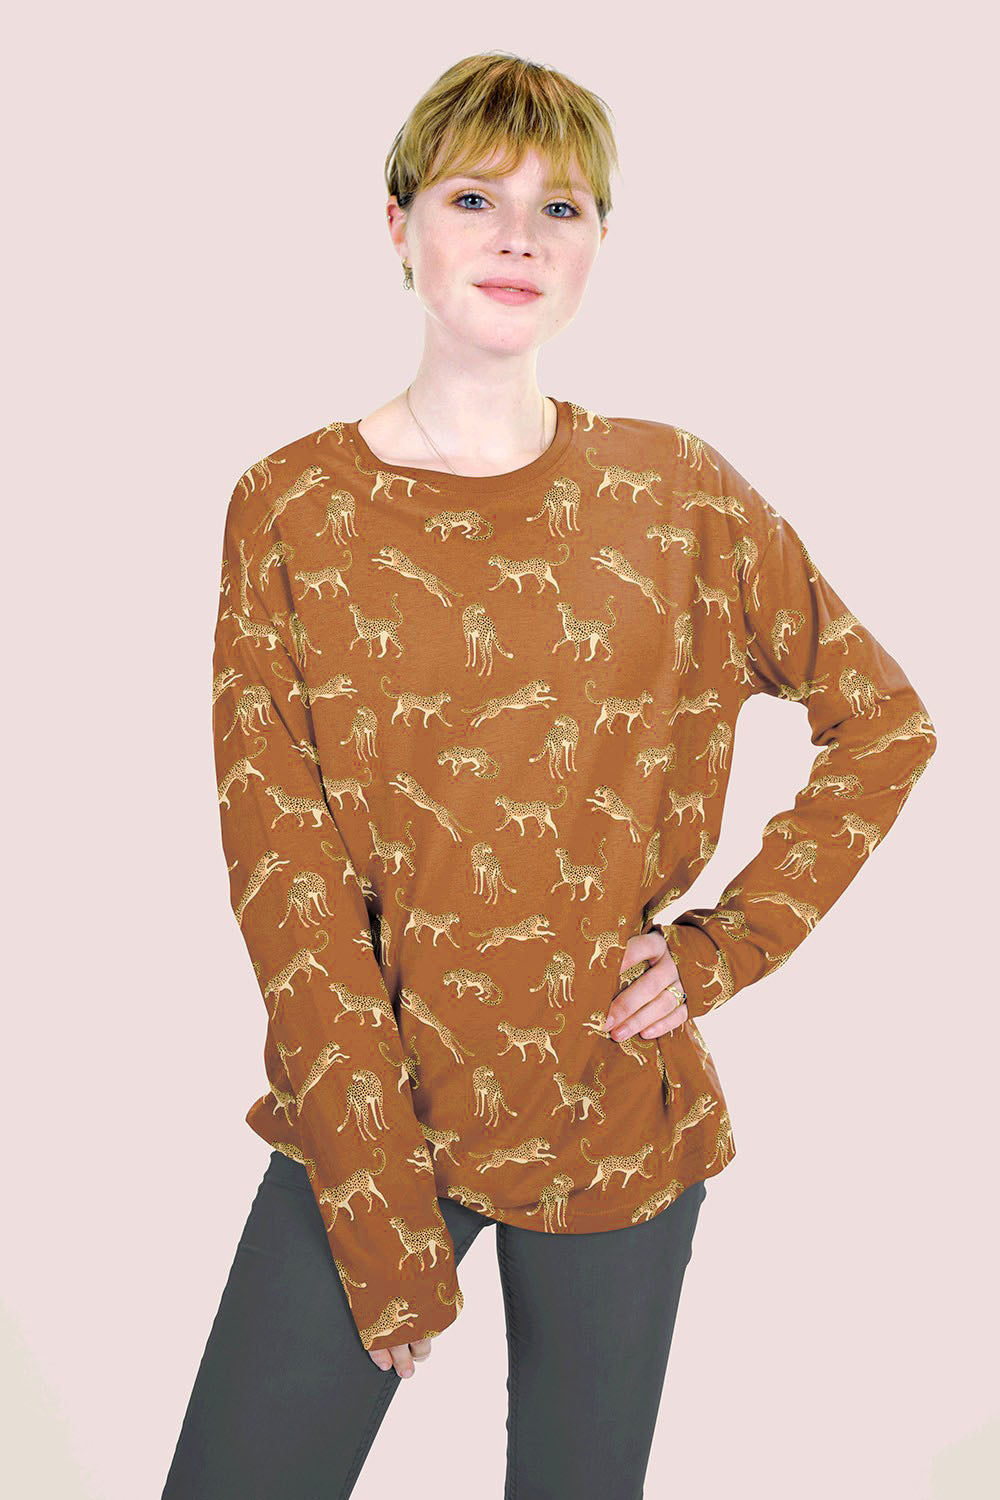 Leopards - Mustard - European Import Cotton Jersey Knit